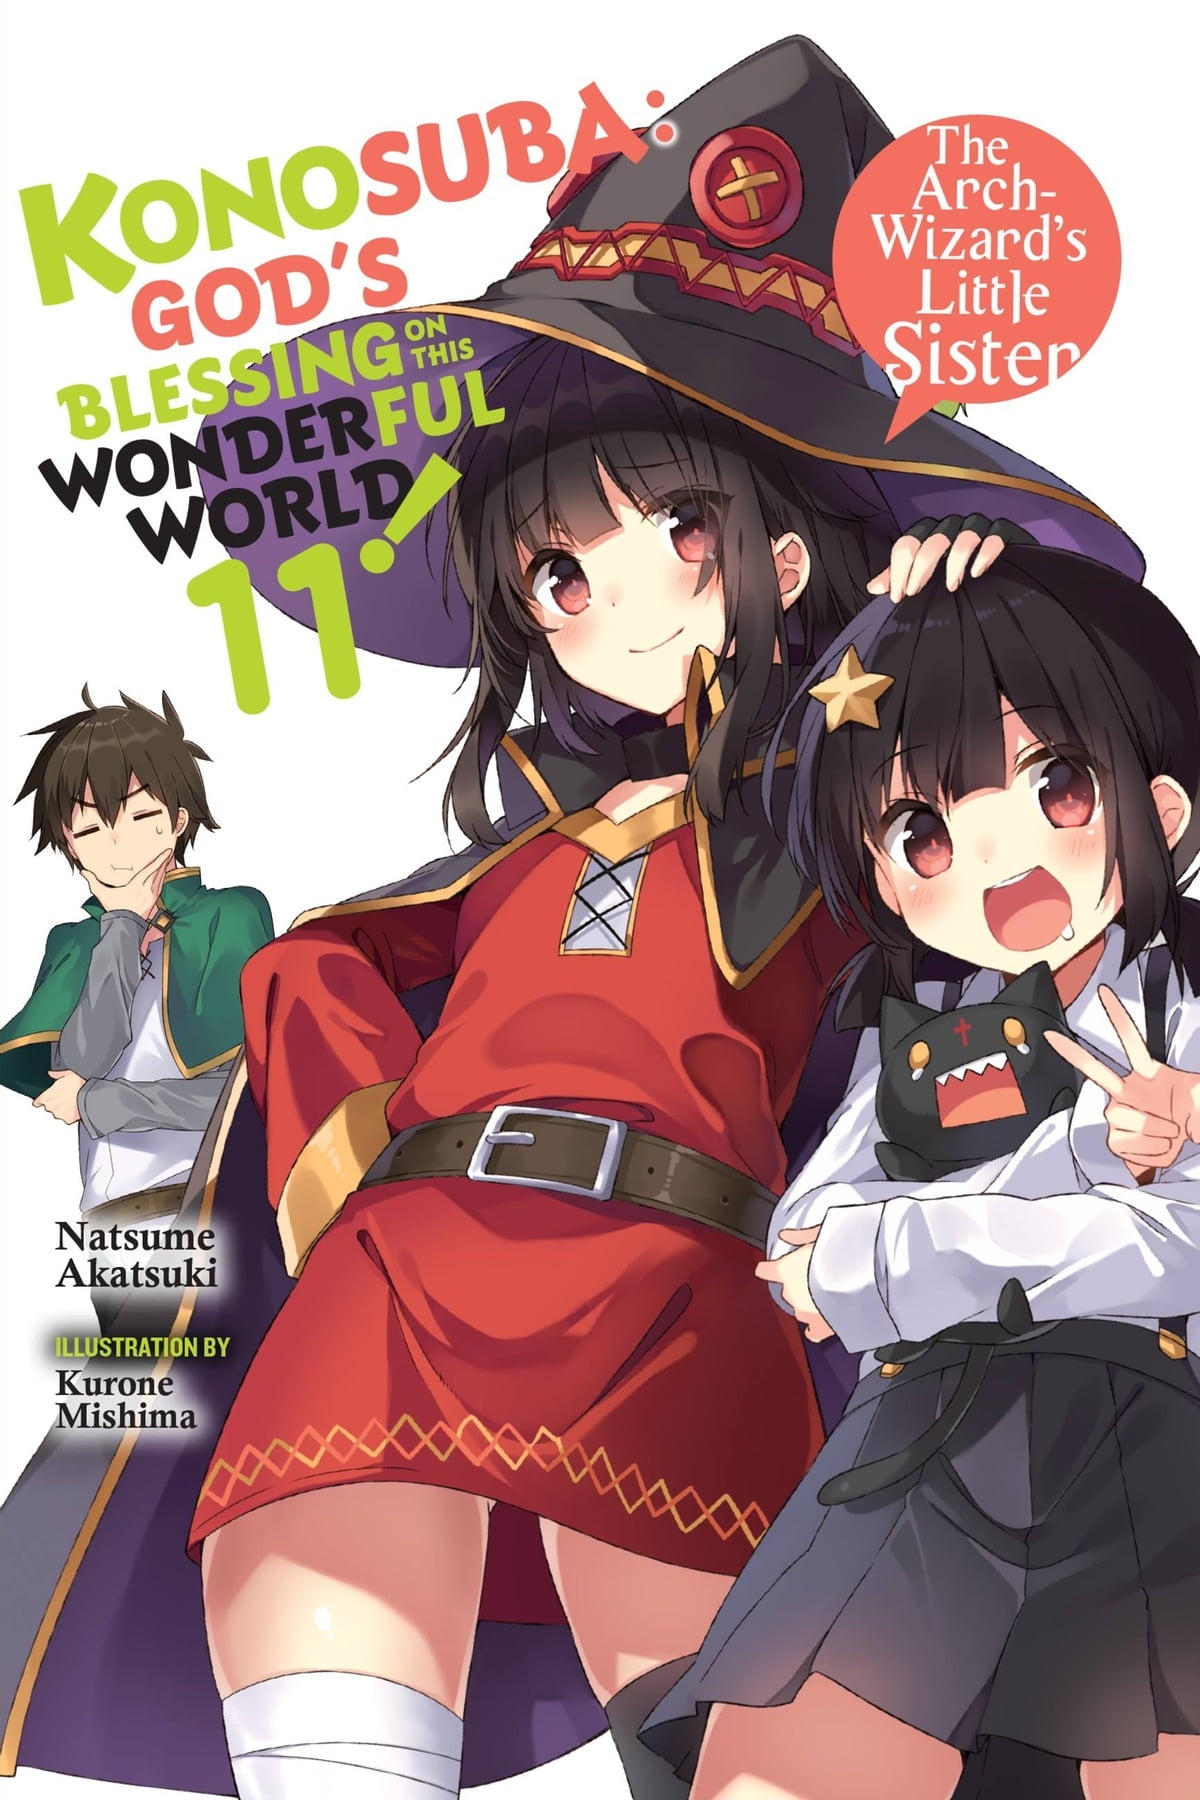 Konosuba: God's Blessing on This Wonderful World! Vol. 11 (Light Novel): The Arch-Wizard's Little Sister